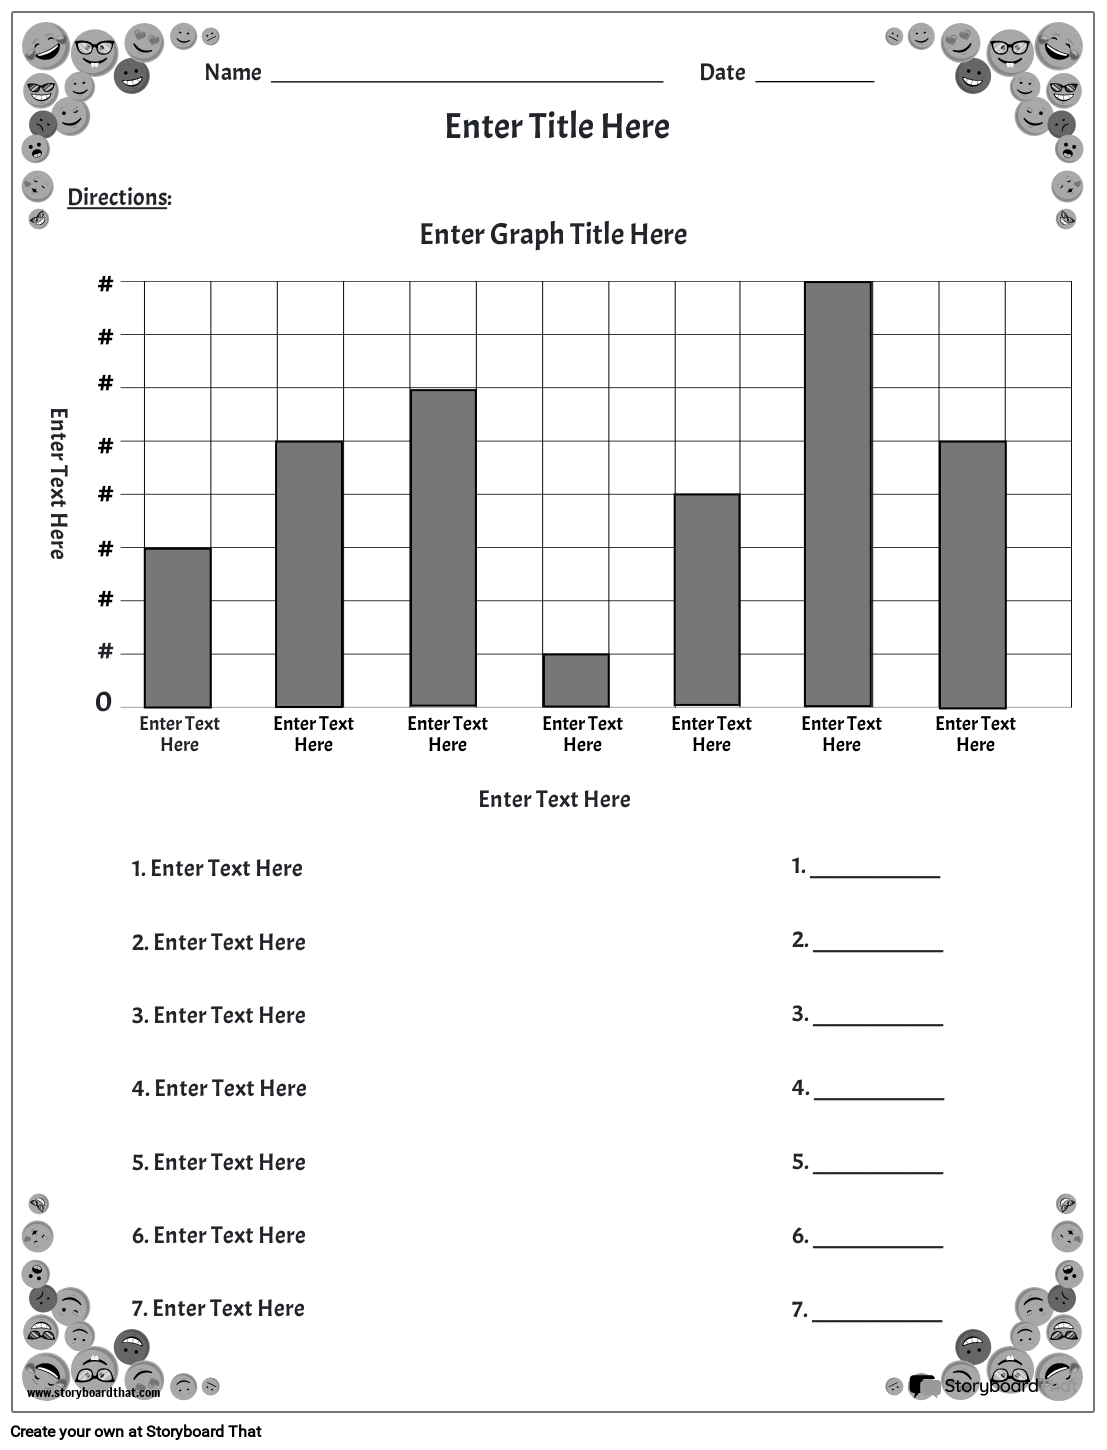 bar-graph-portrait-bw-1-storyboard-door-worksheet-templates